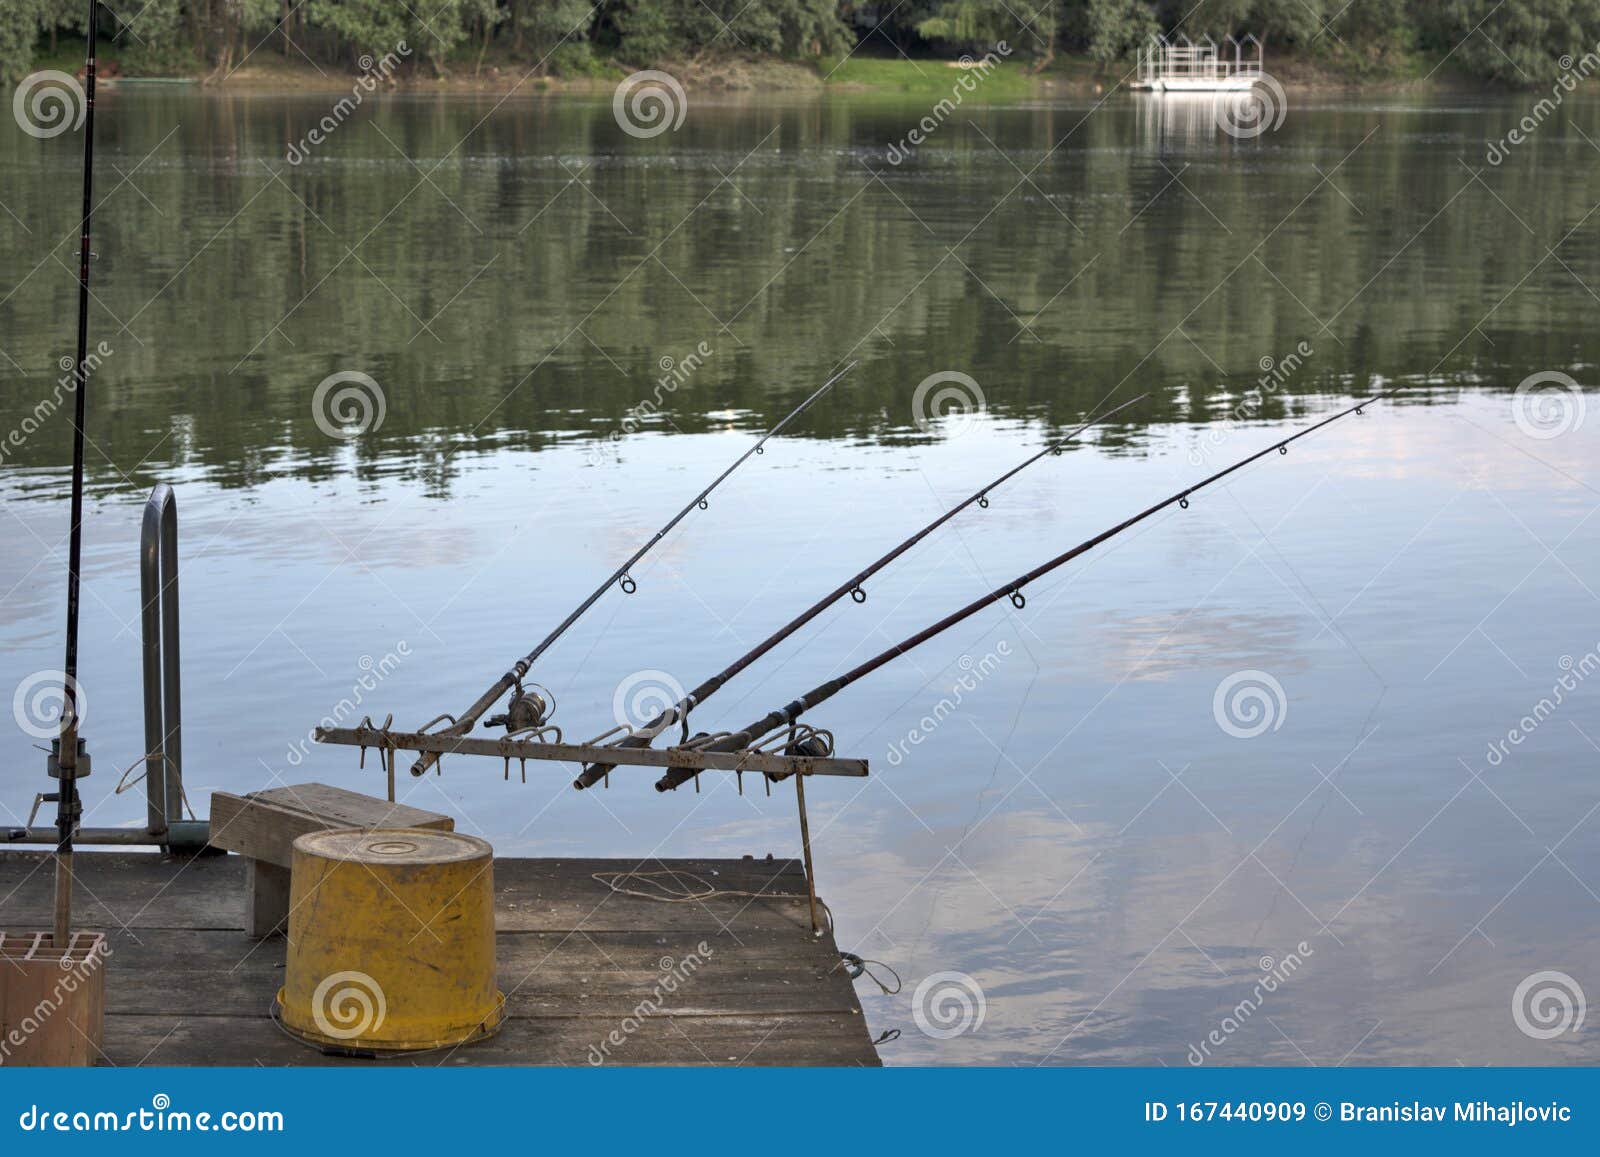 https://thumbs.dreamstime.com/z/fishing-platform-wooden-raft-sport-located-river-tisa-serbia-much-easier-to-fish-167440909.jpg